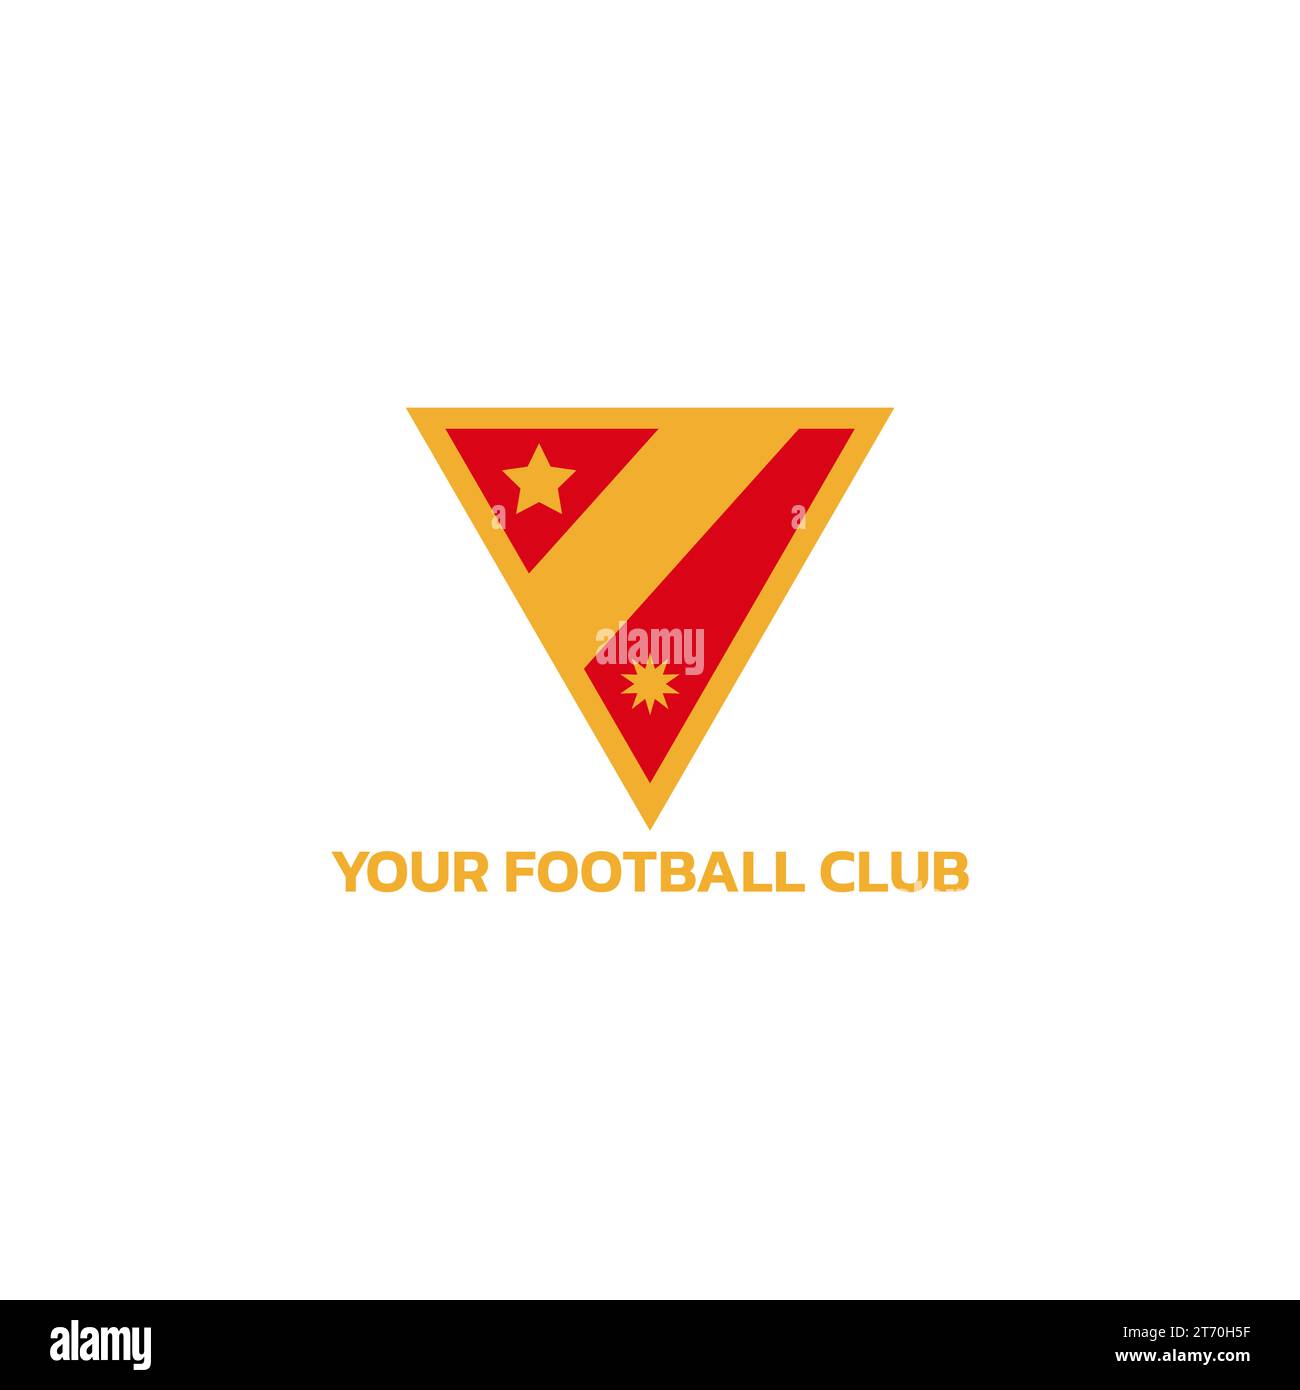 Football club emblem logo in triangular shape with stars and sun. Stock Vector